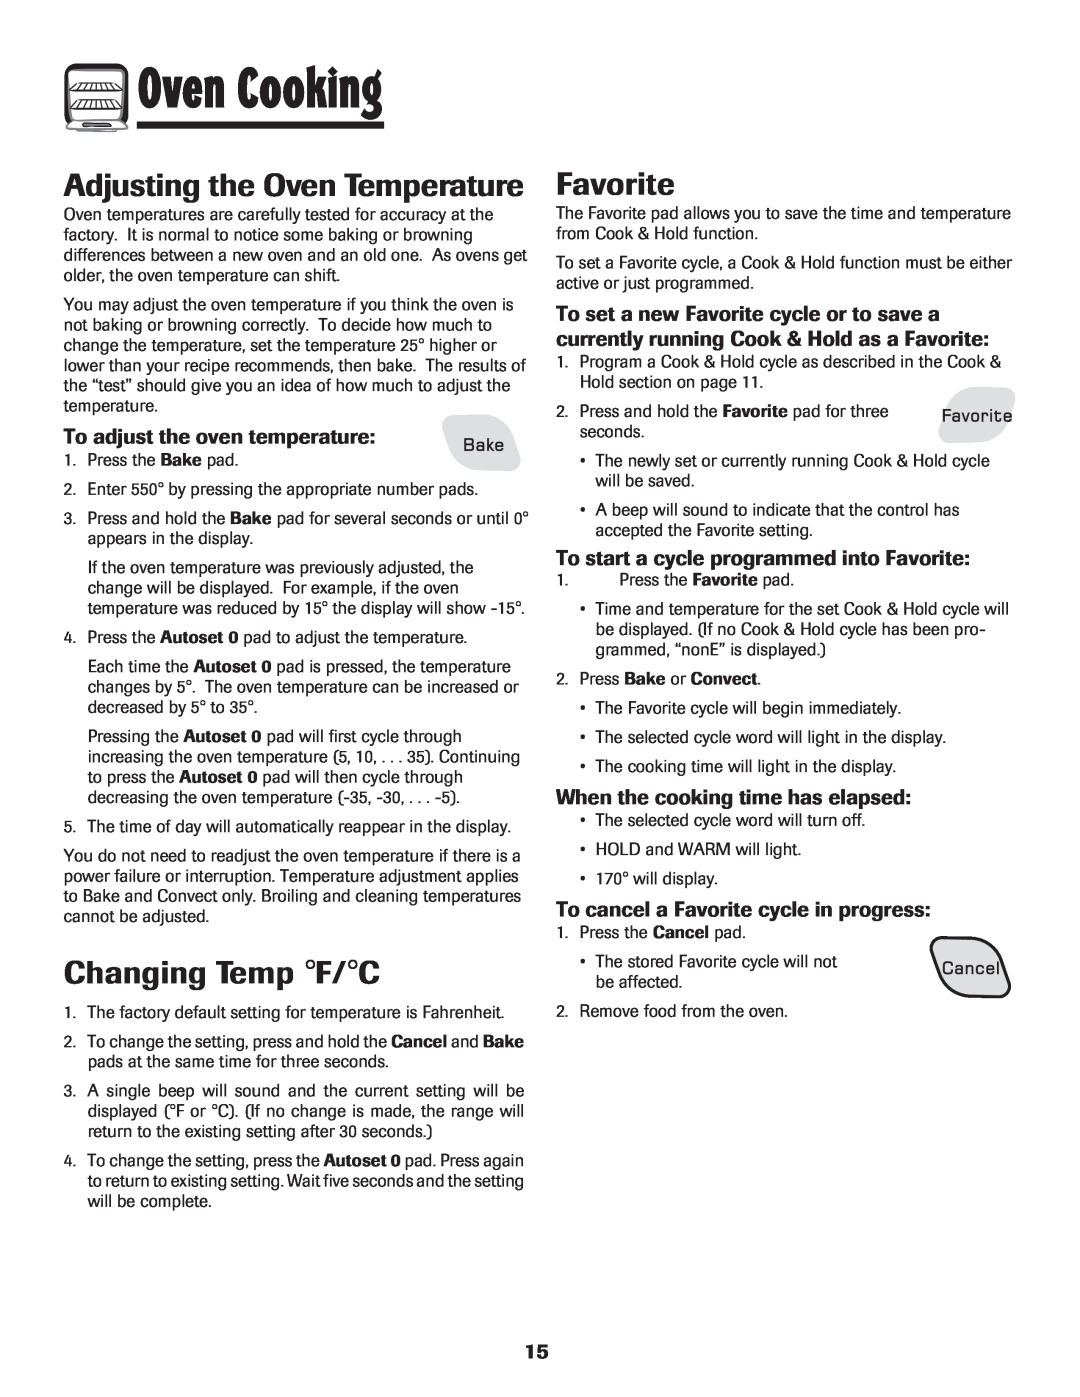 Amana 8113P487-60 Adjusting the Oven Temperature, Changing Temp F/C, Favorite, To adjust the oven temperature 